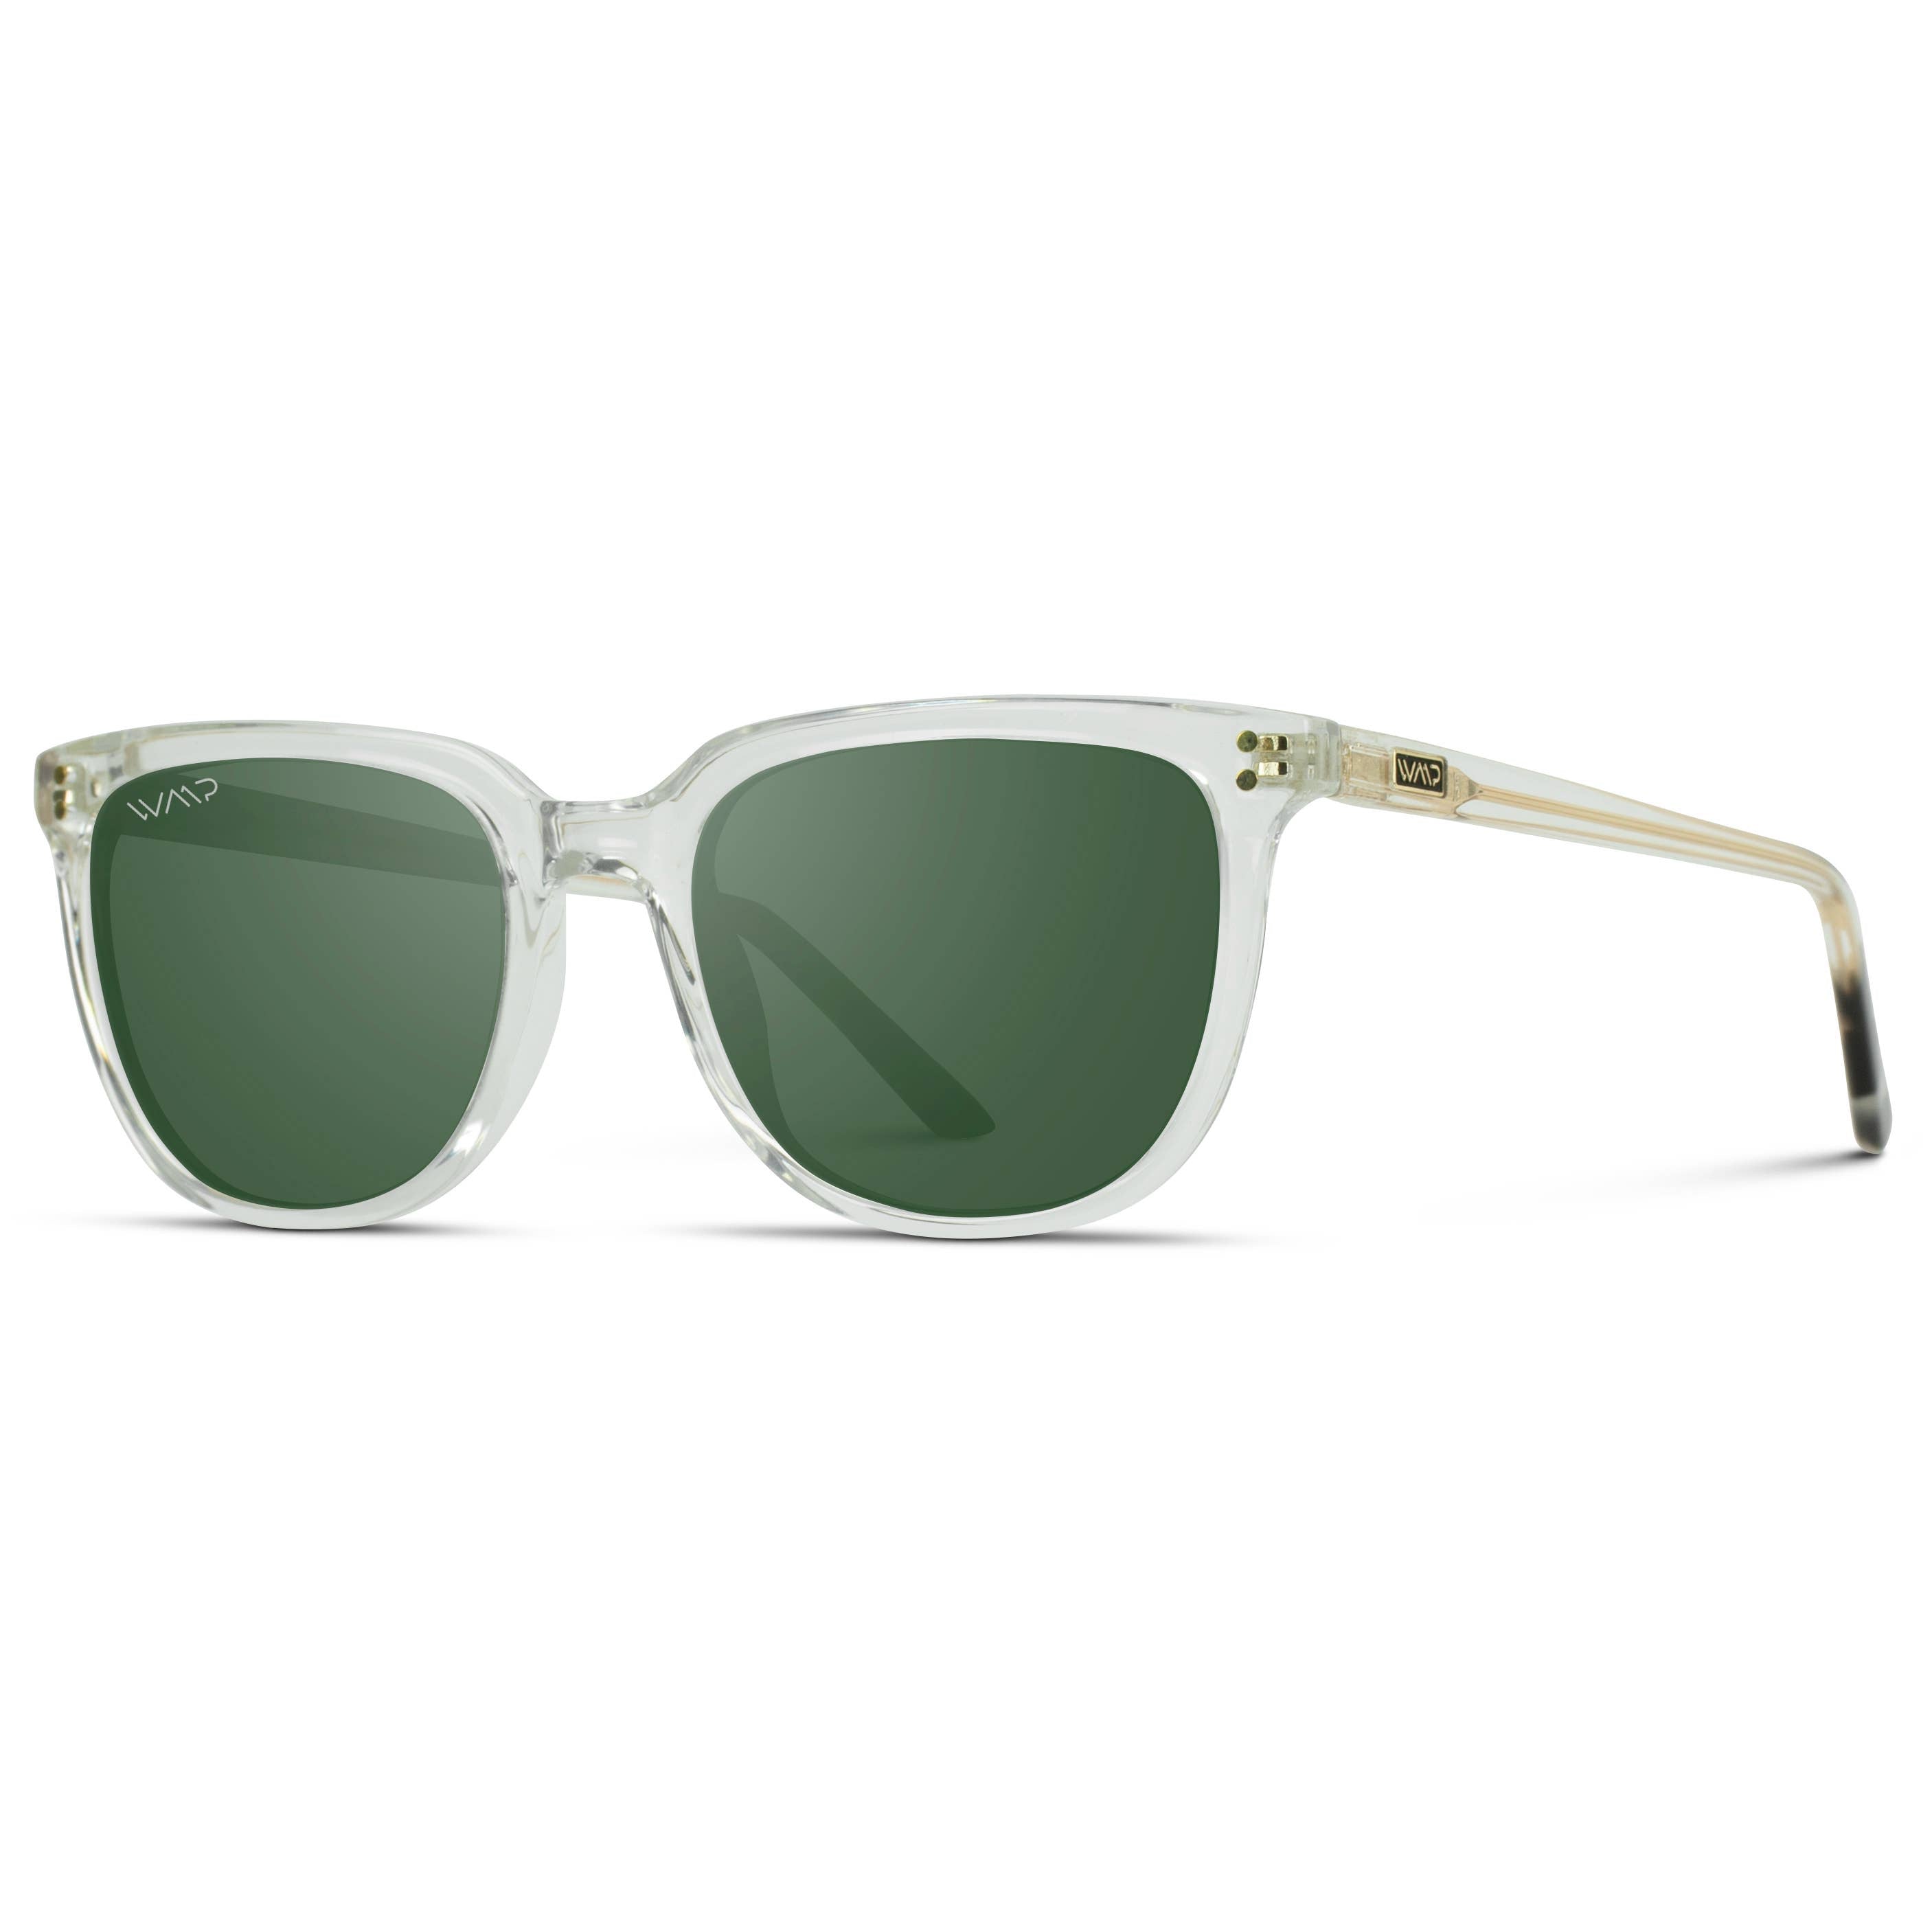 Abner - Classic Retro Square Design Grey Frame Sunglasses